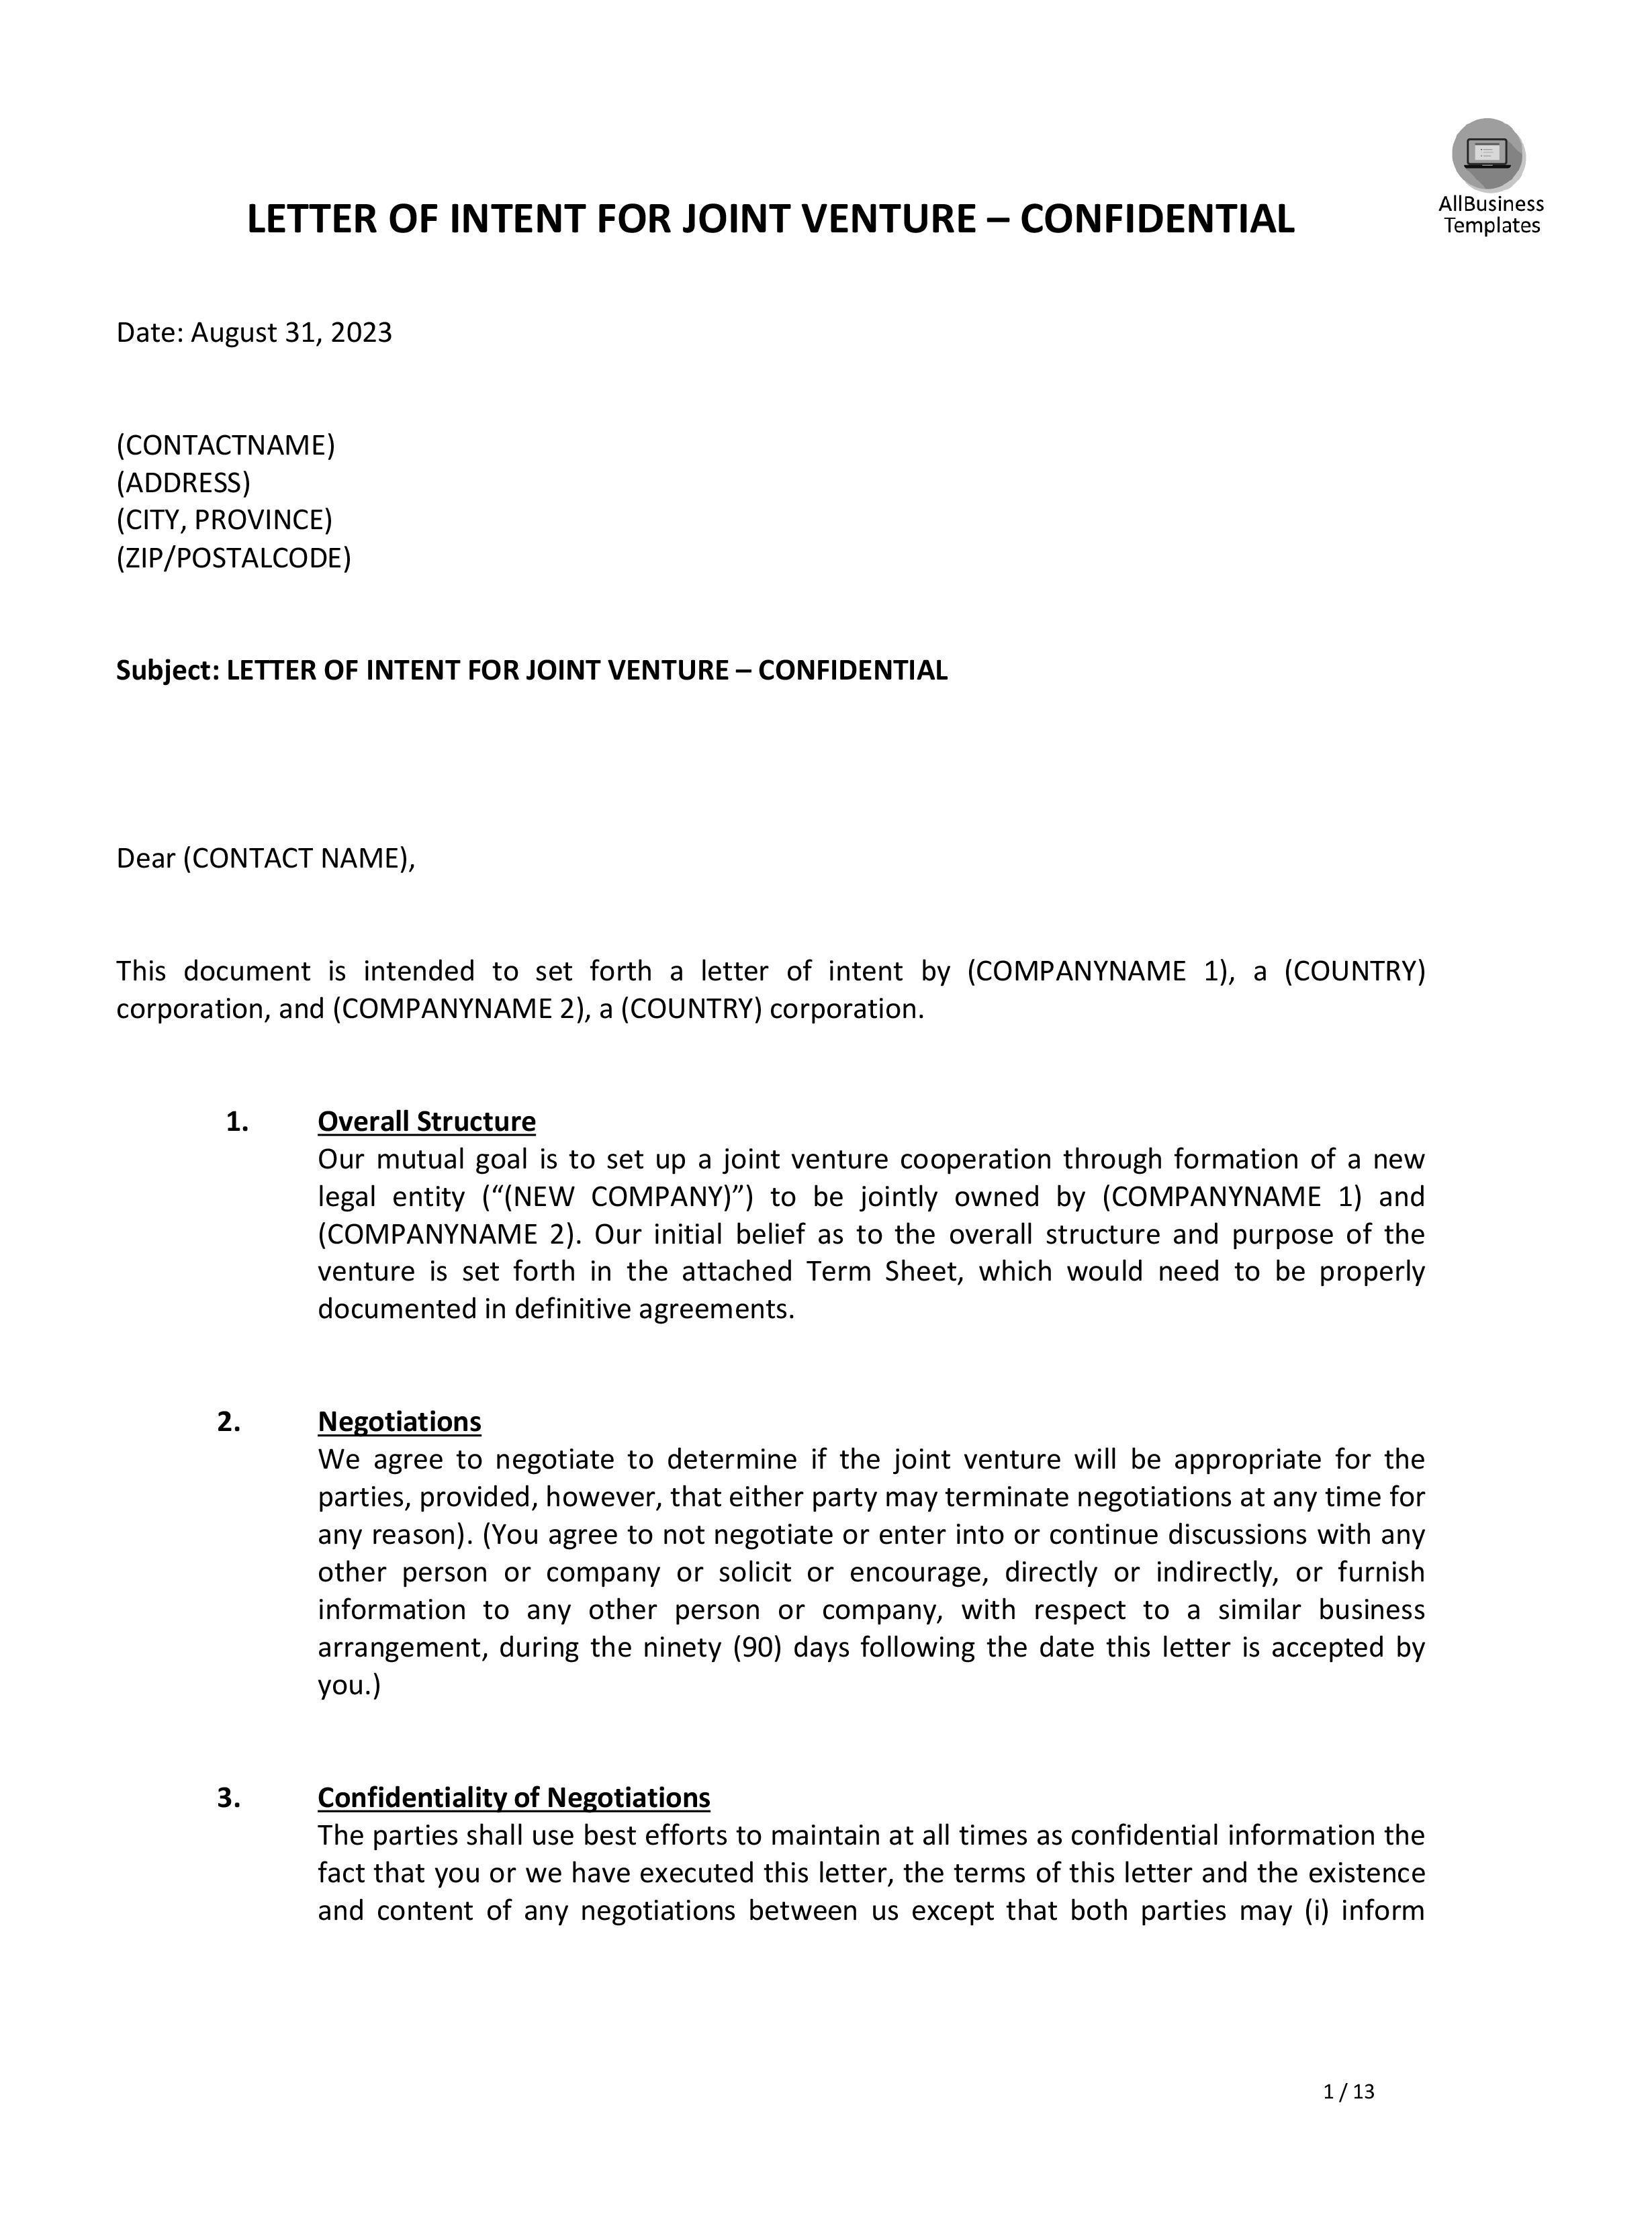 joint venture letter of intent template plantilla imagen principal